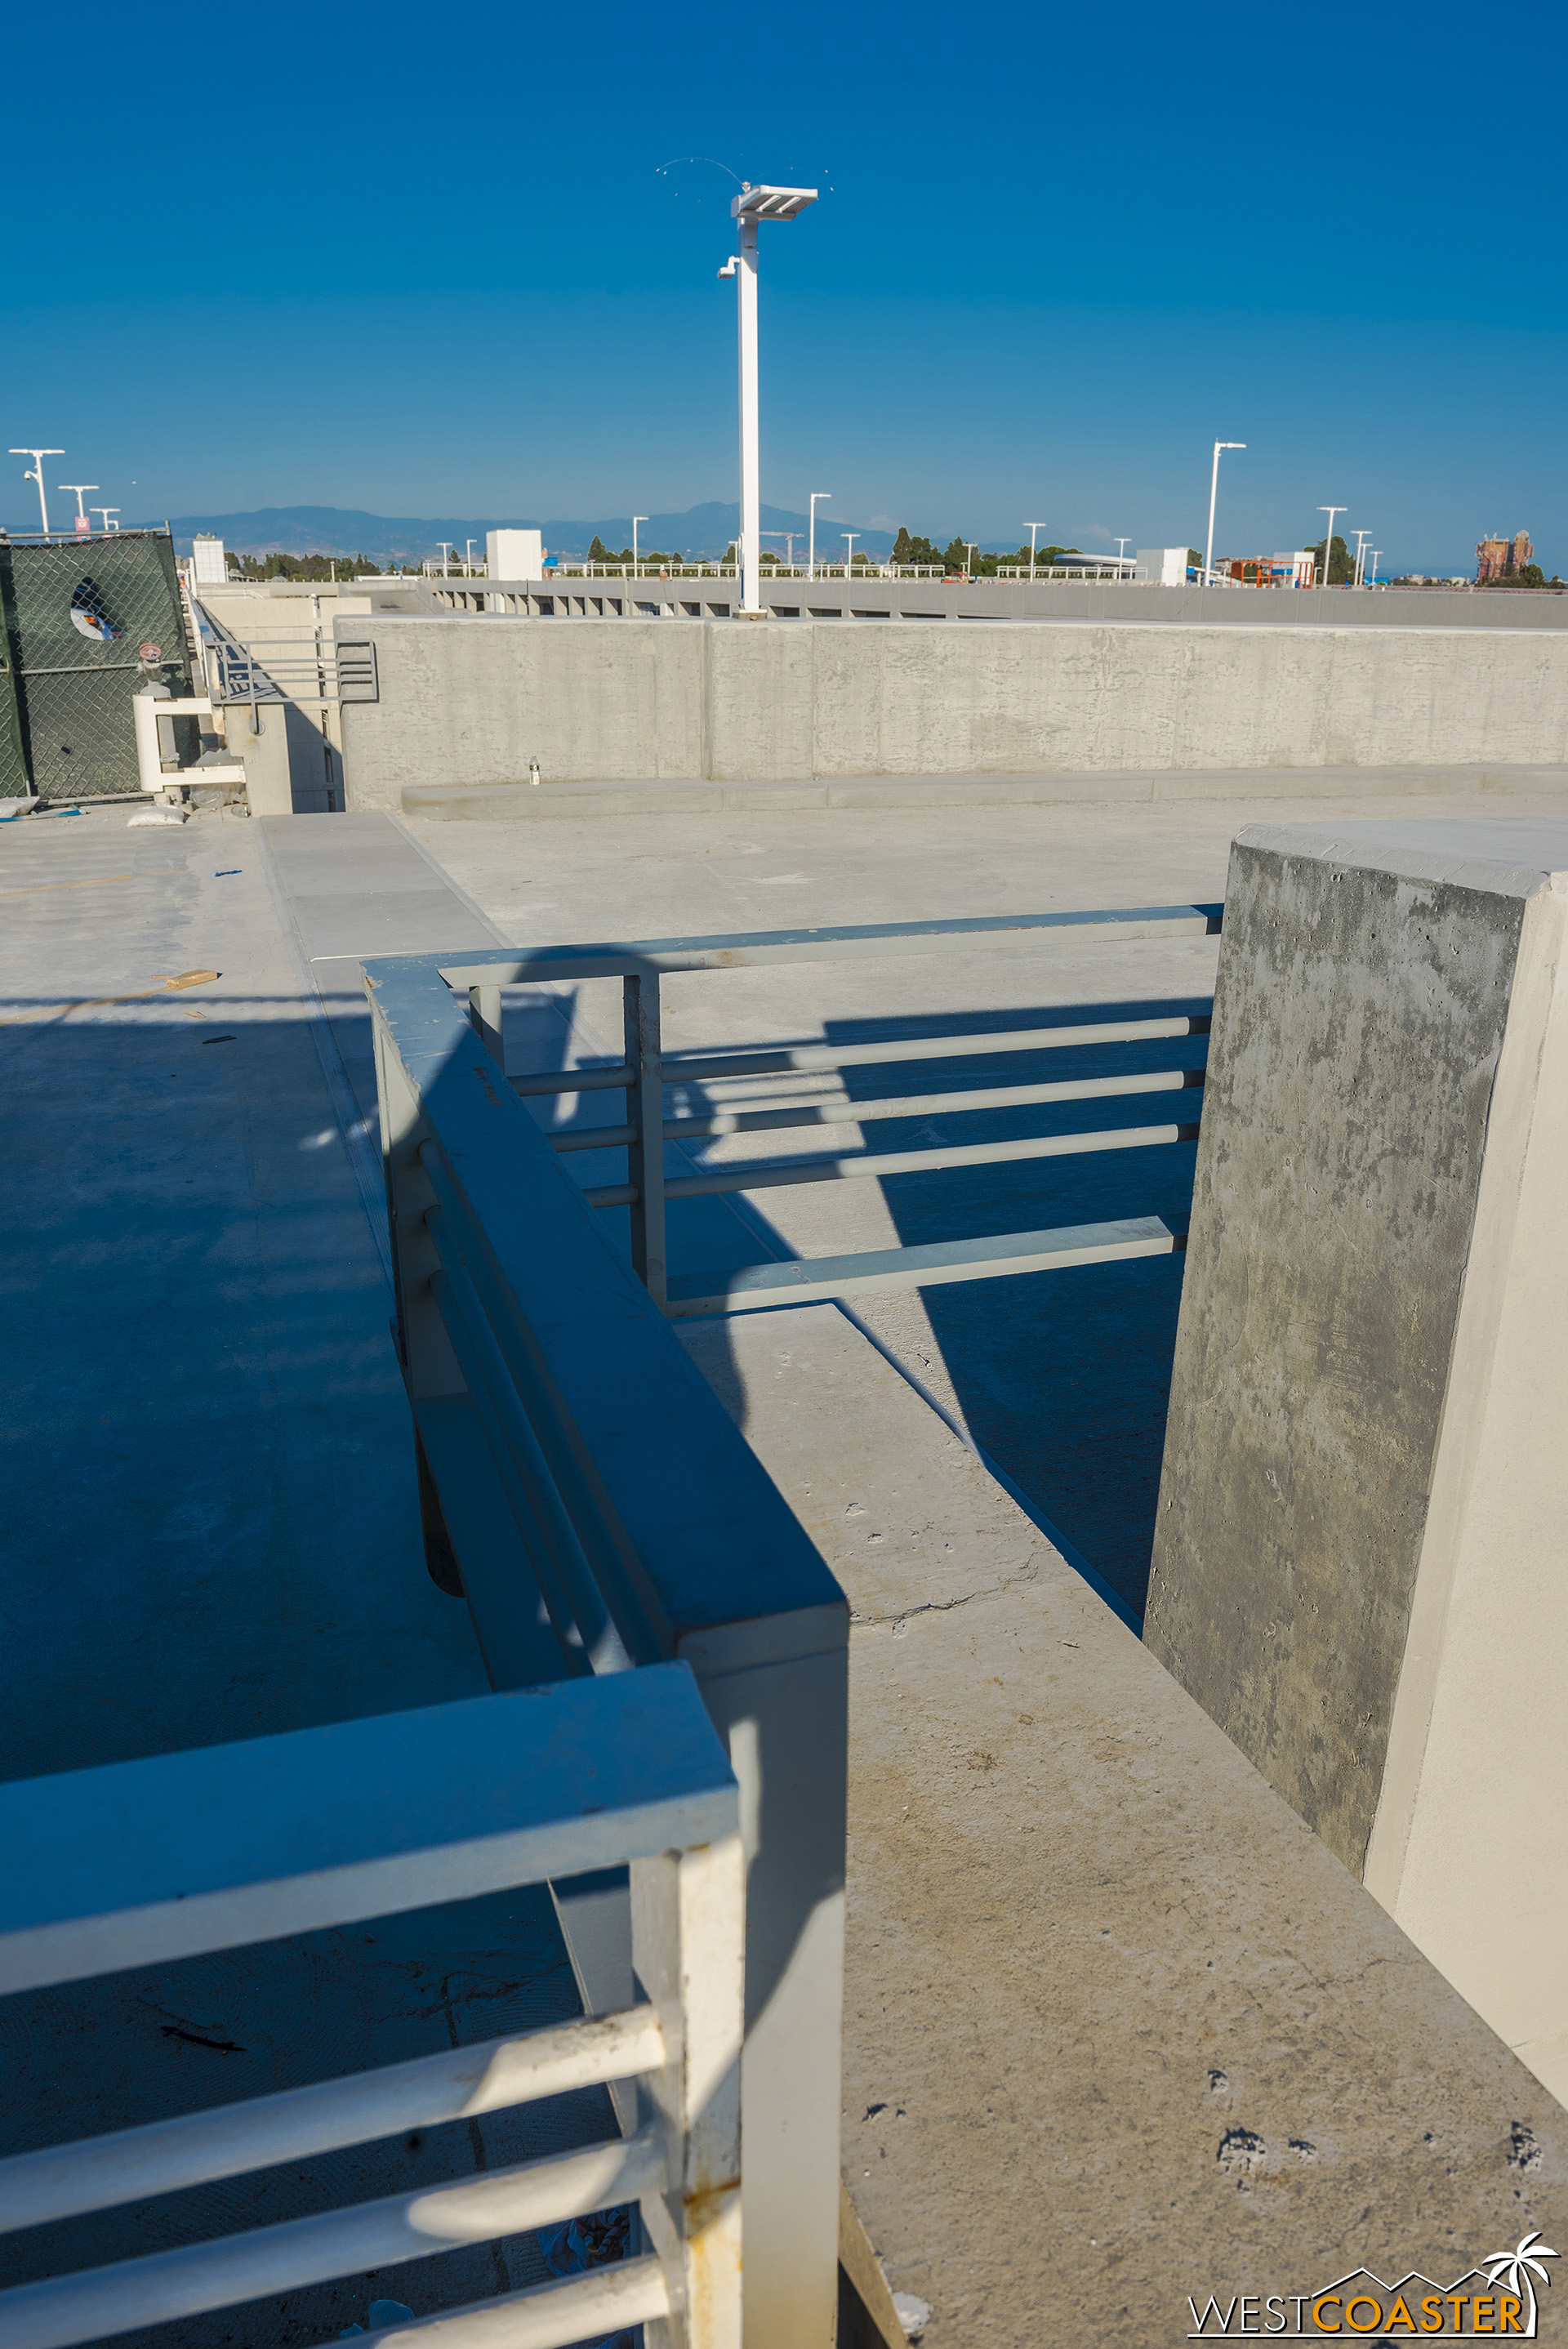  The guardrails shield the gap between concrete. 